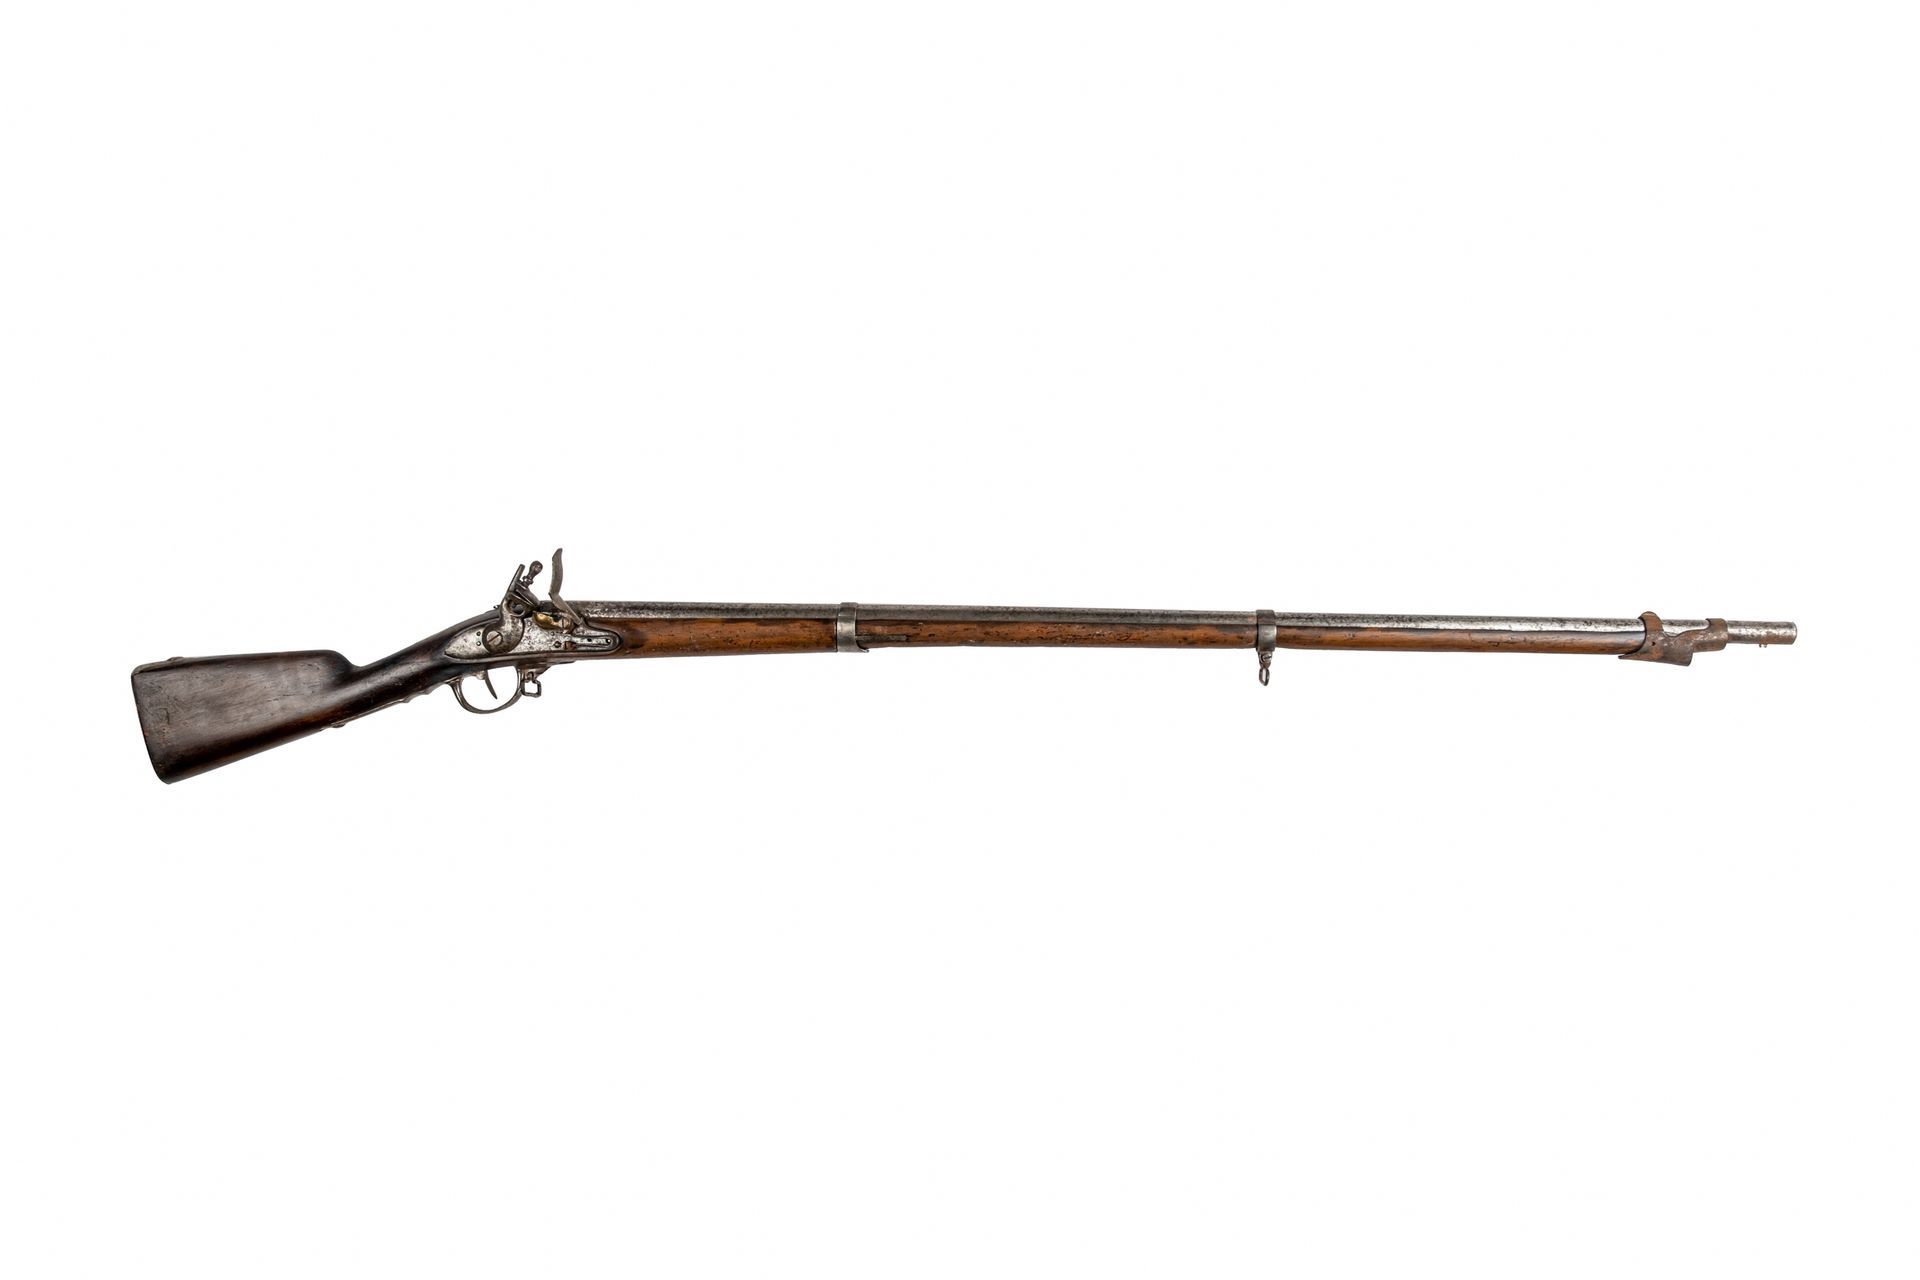 Null 燧发枪步兵步枪1777-AN IX.

圆形枪管，有雷同的平面（尾座上的螺钉改变）。锁上刻有 "圣艾蒂安"，盖有印章和日期84。

冲压的铁质配件和A&hellip;